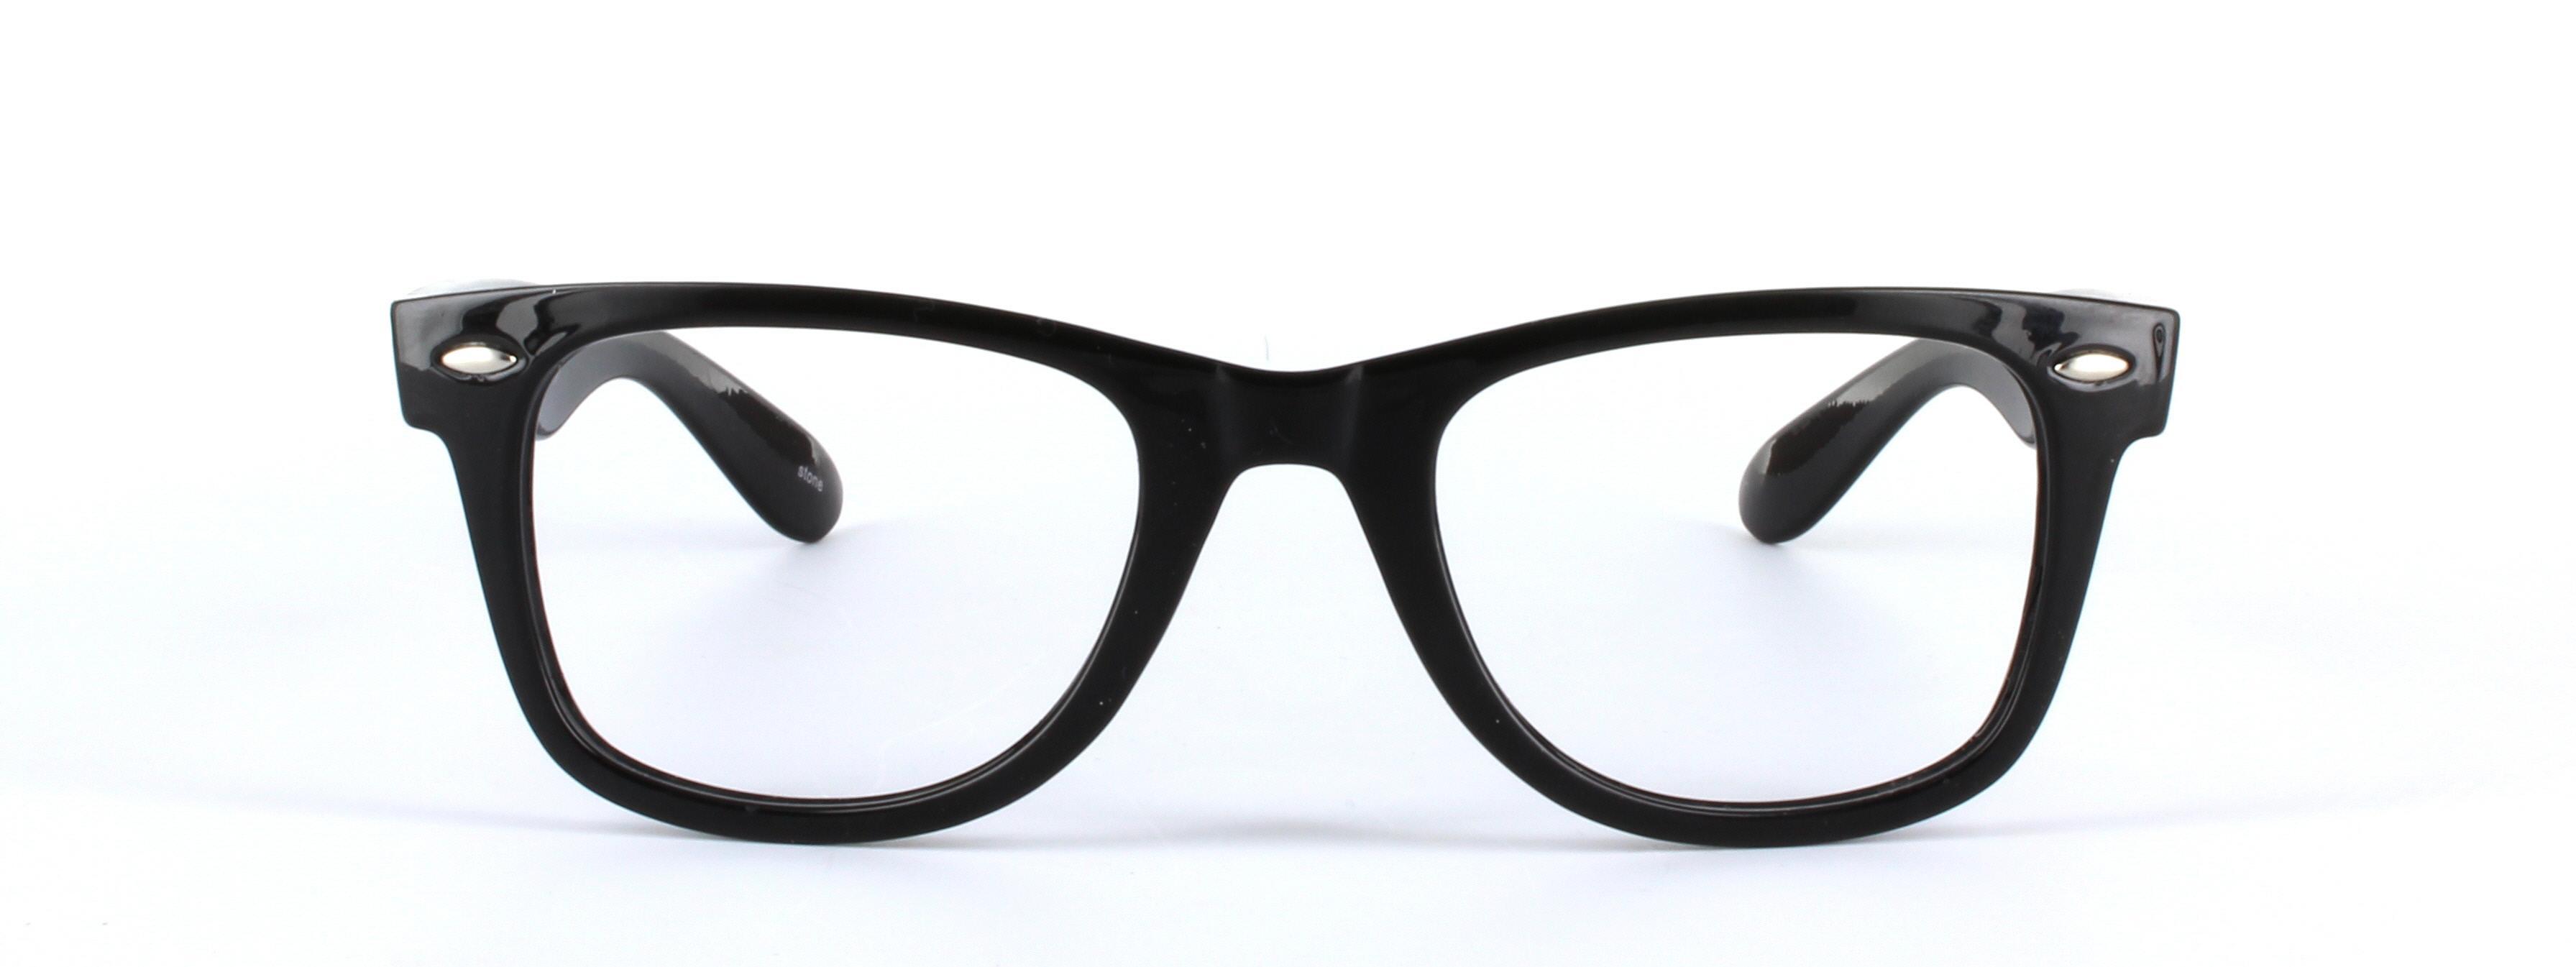 England Black Full Rim Oval Plastic Glasses - Image View 5